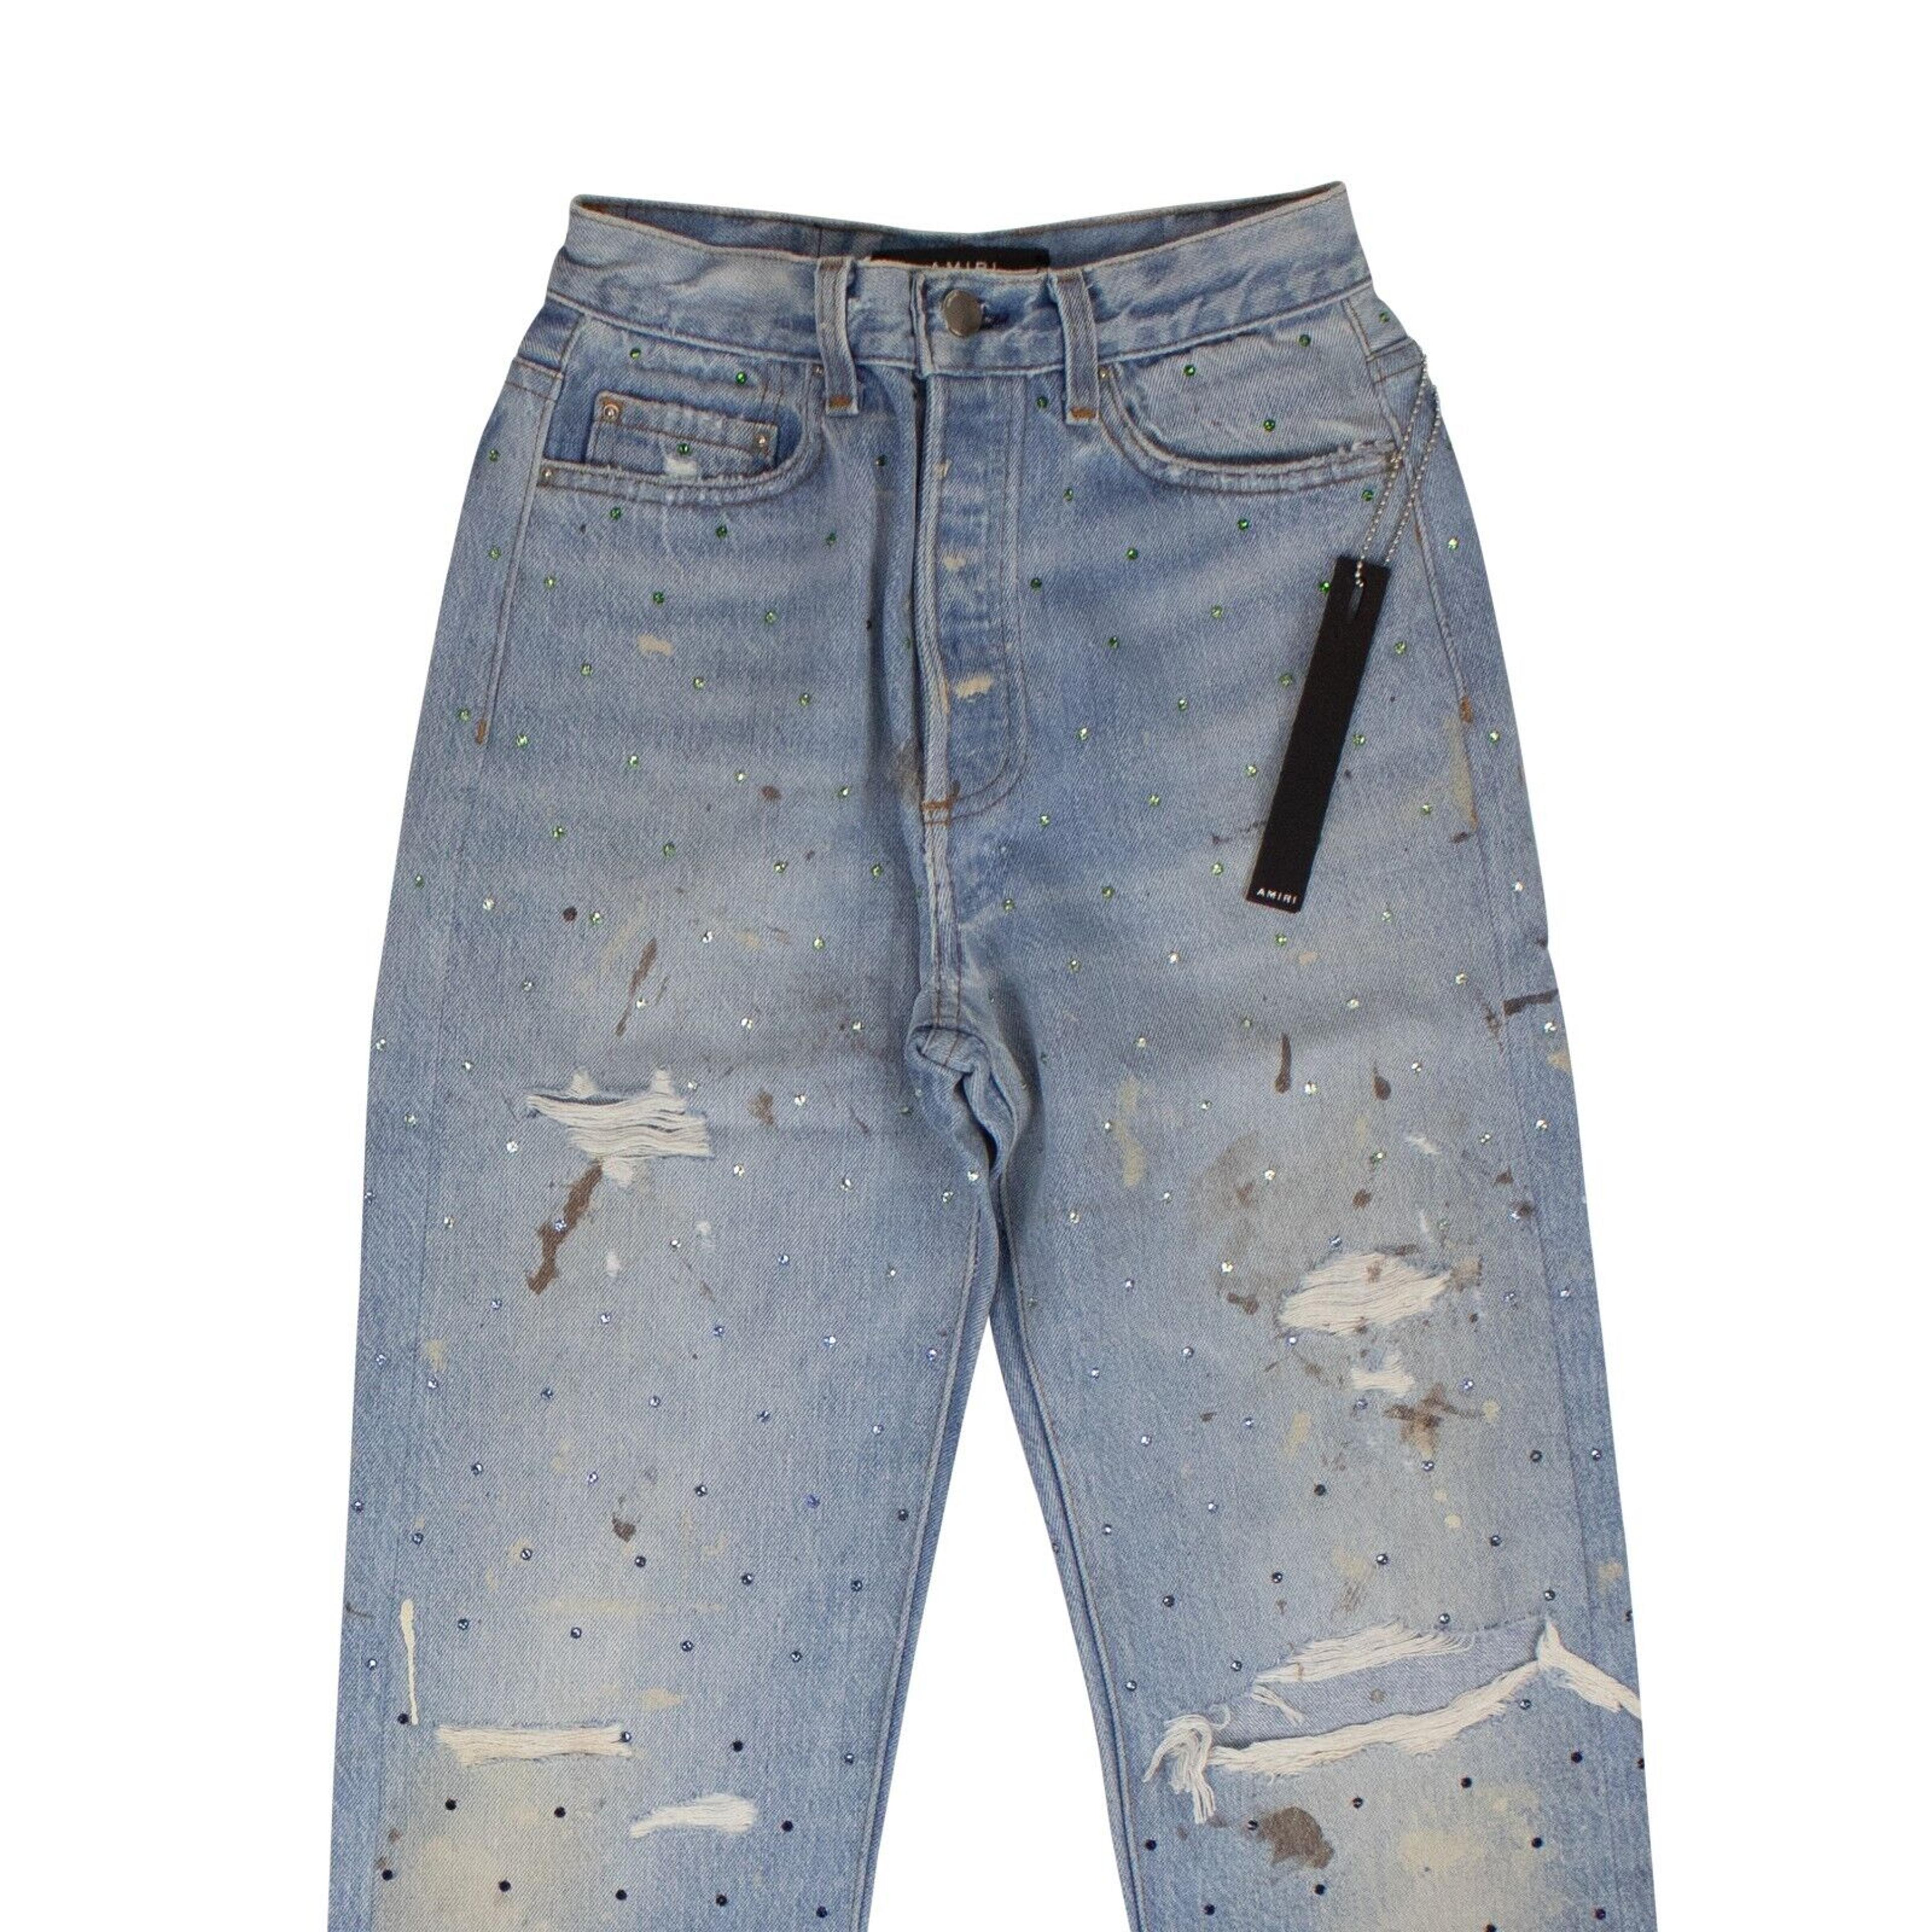 Alternate View 1 of Blue Gradient Crystal Recon Denim Jeans